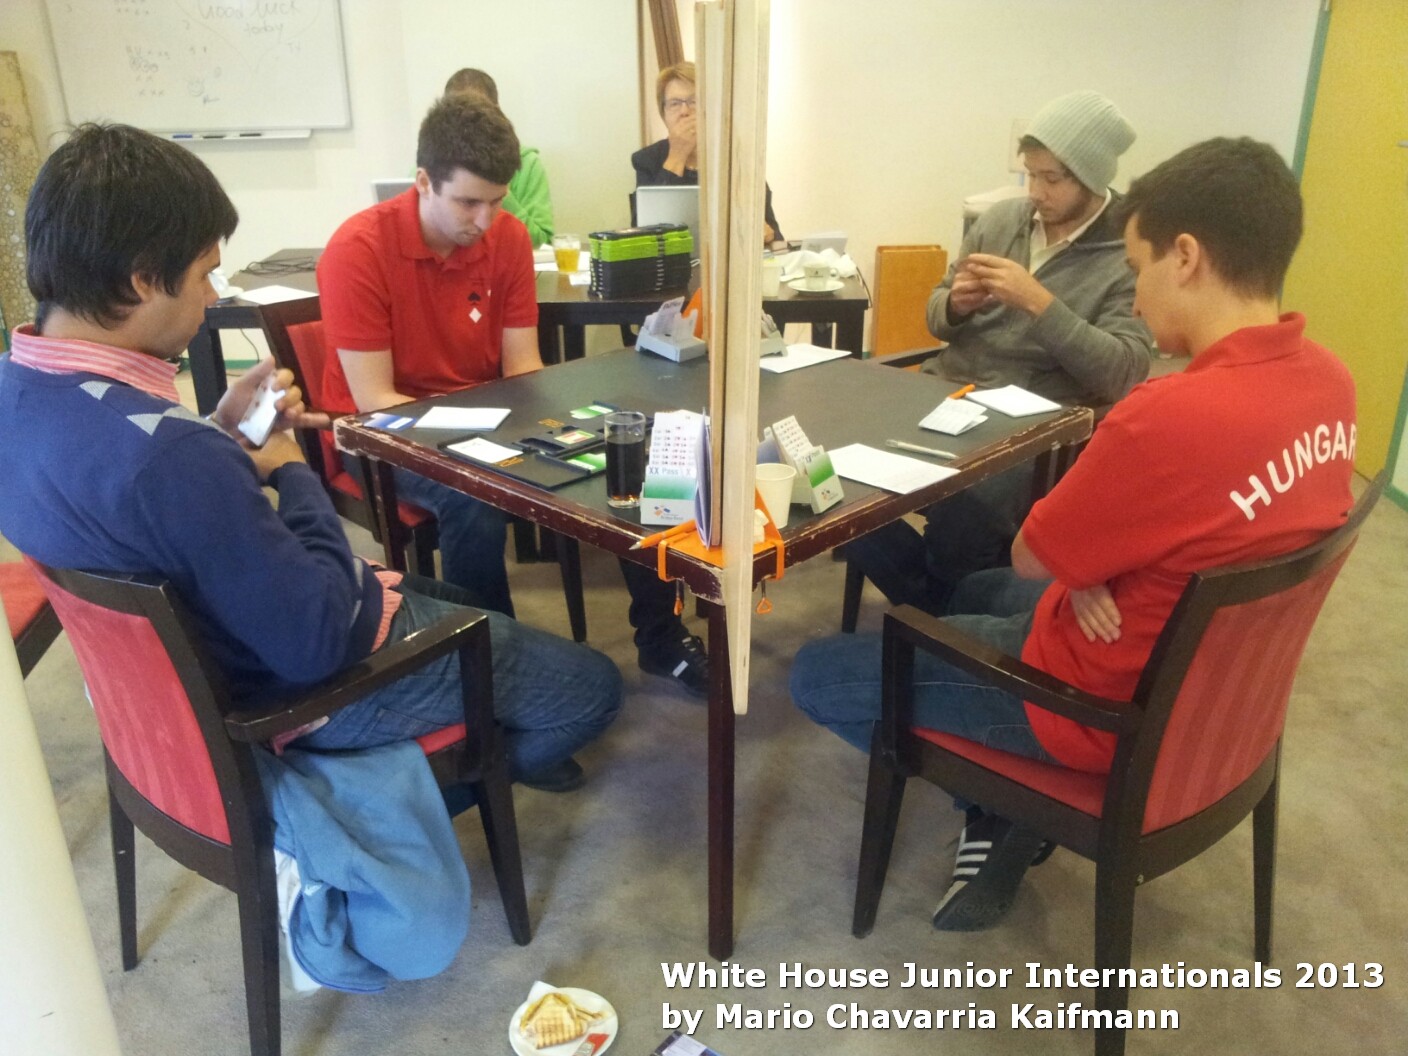 2013 White House Junior Internationals: The Final